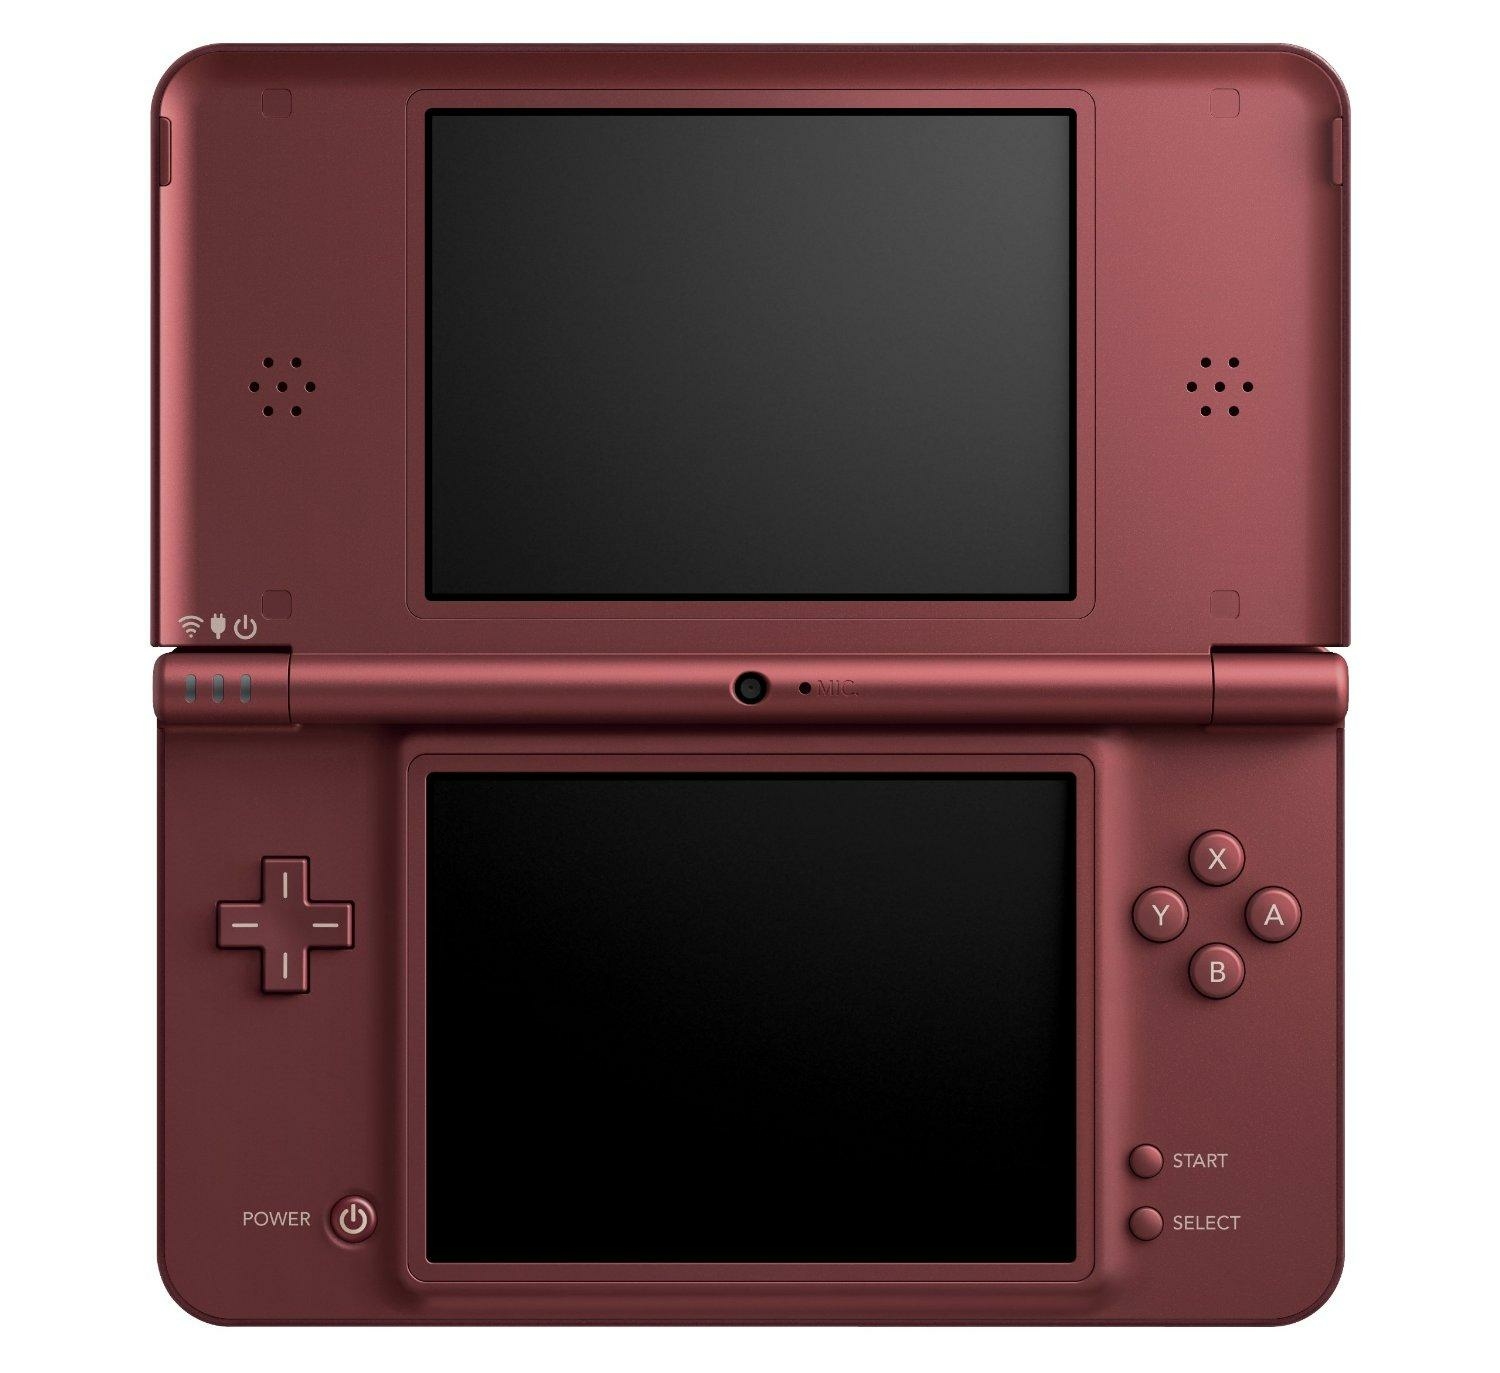 Nintendo Ds Xl Gelb : Nintendo DSi XL - Konsole, gelb: Amazon.de: Games ...